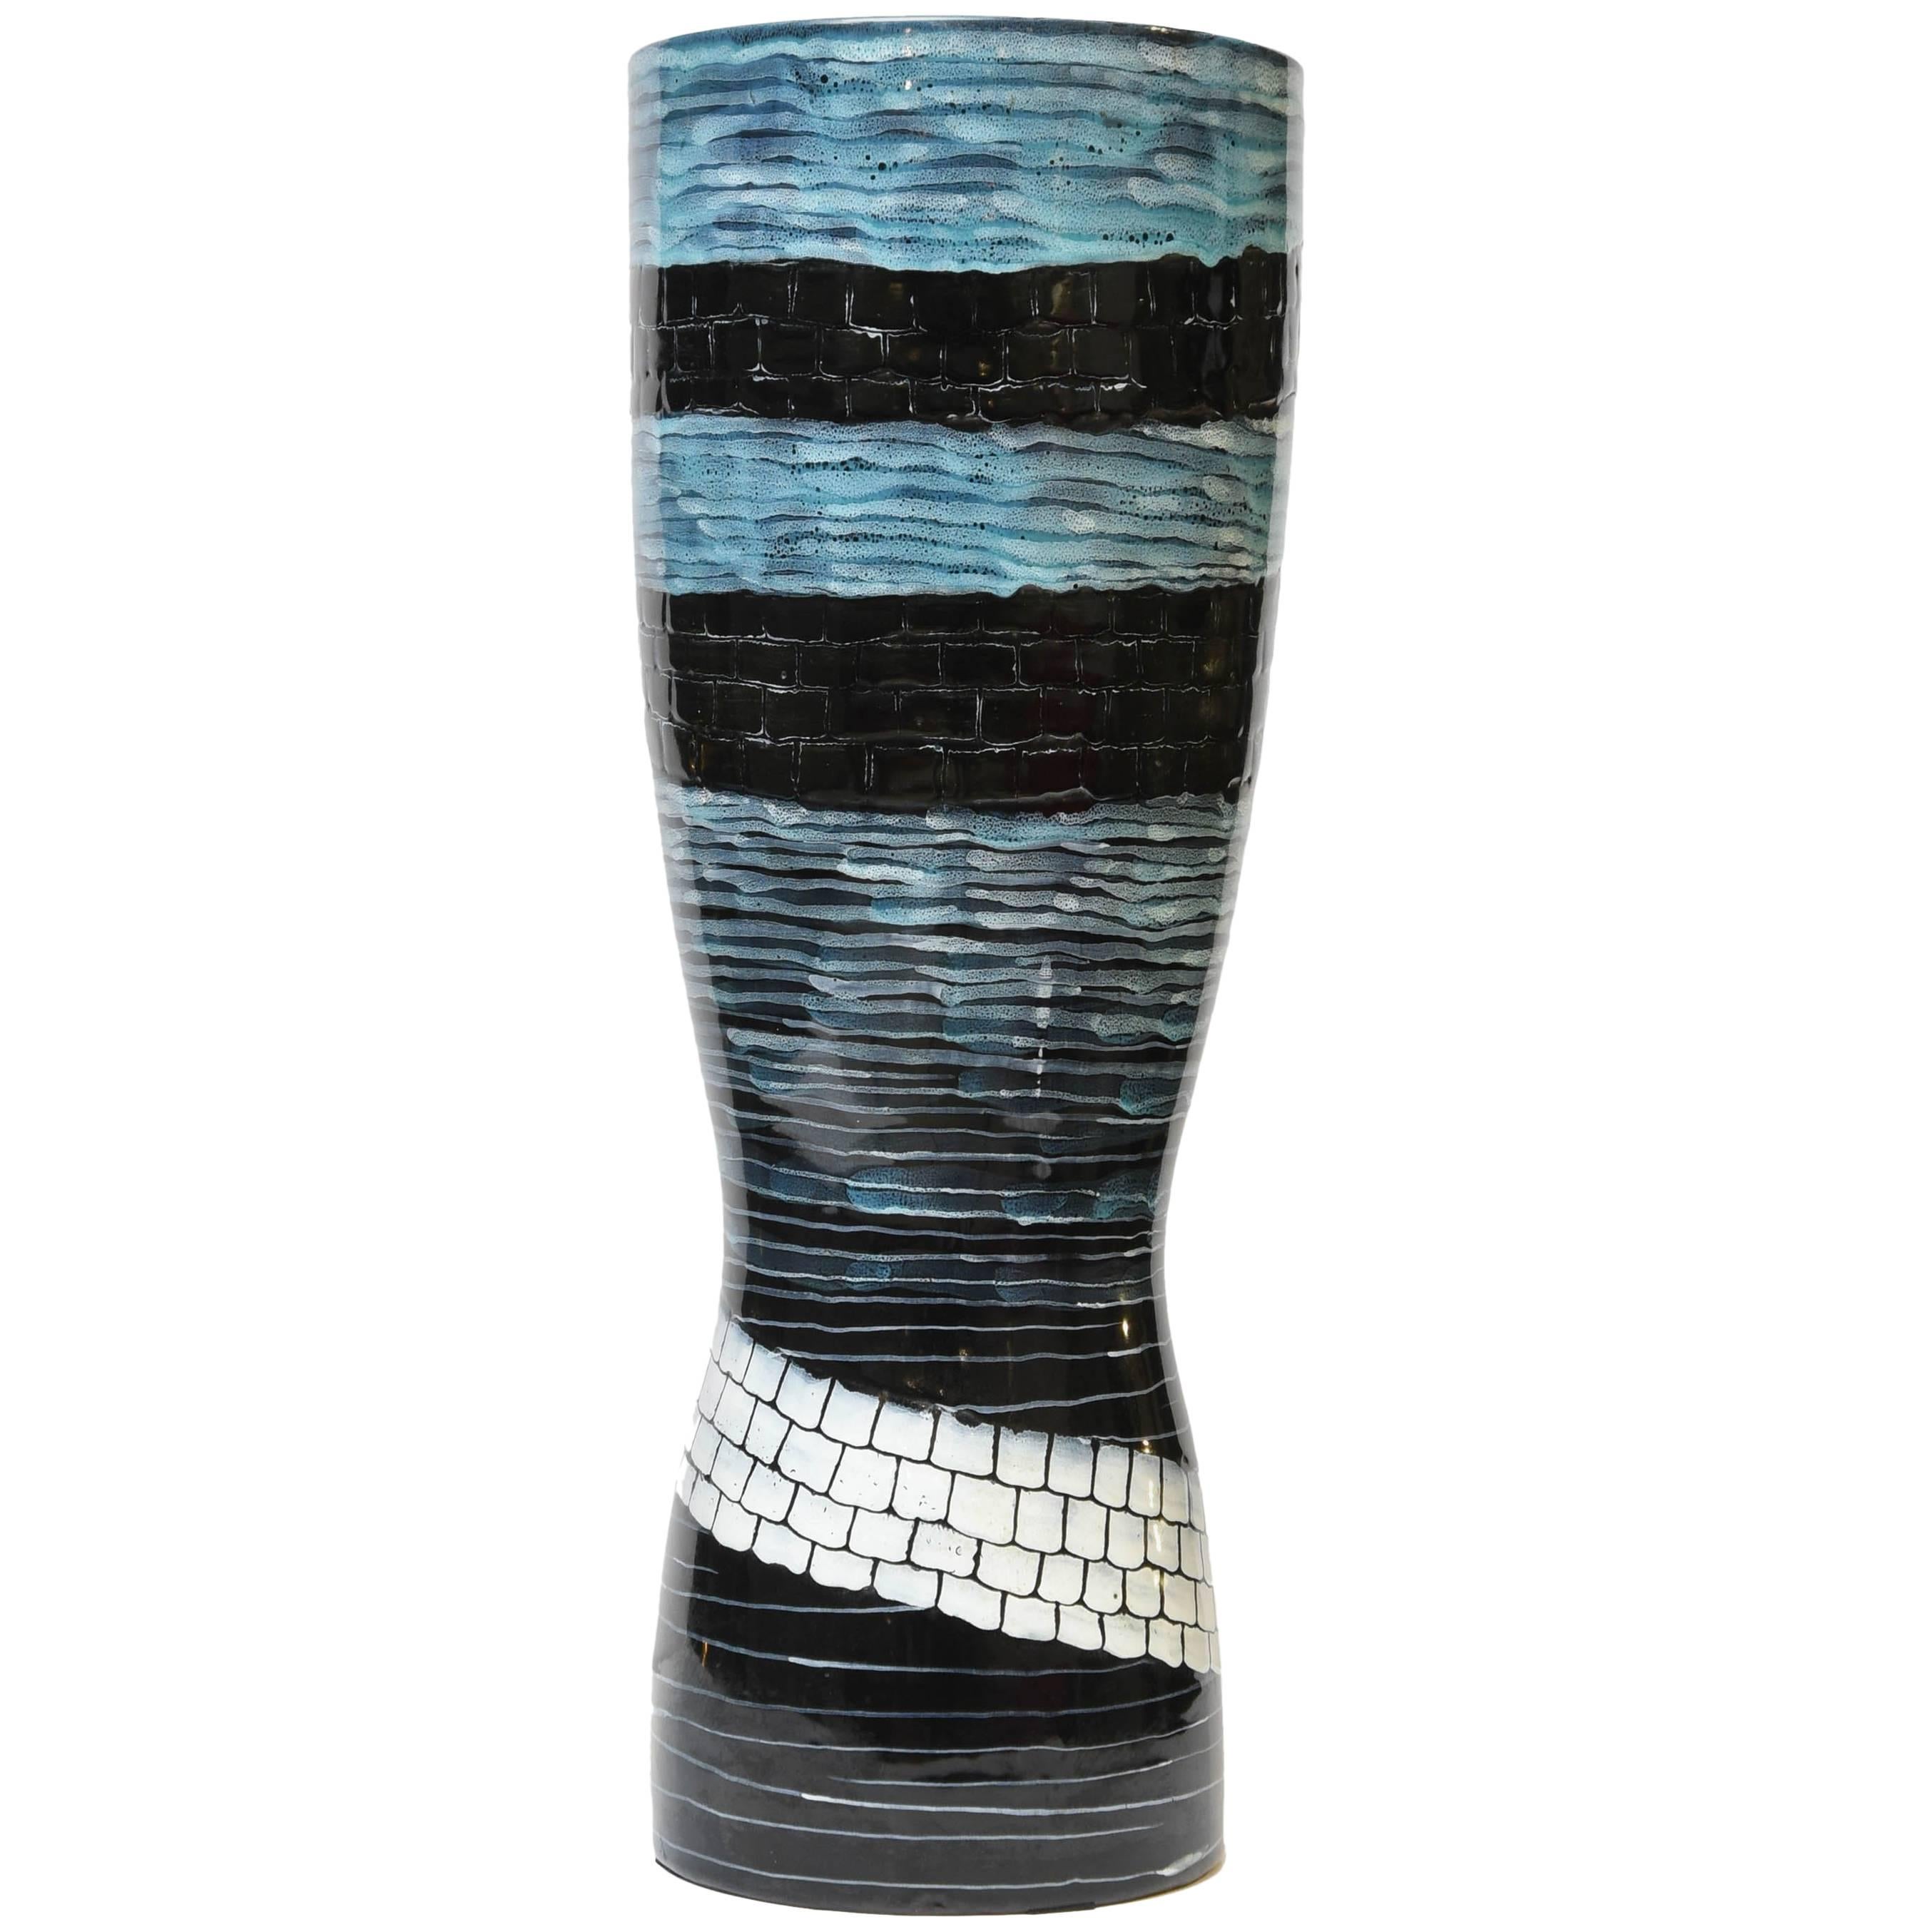 San Polo Otello Rosa's Majolica Vase, Light Blue, White and Black Mosaic Pattern